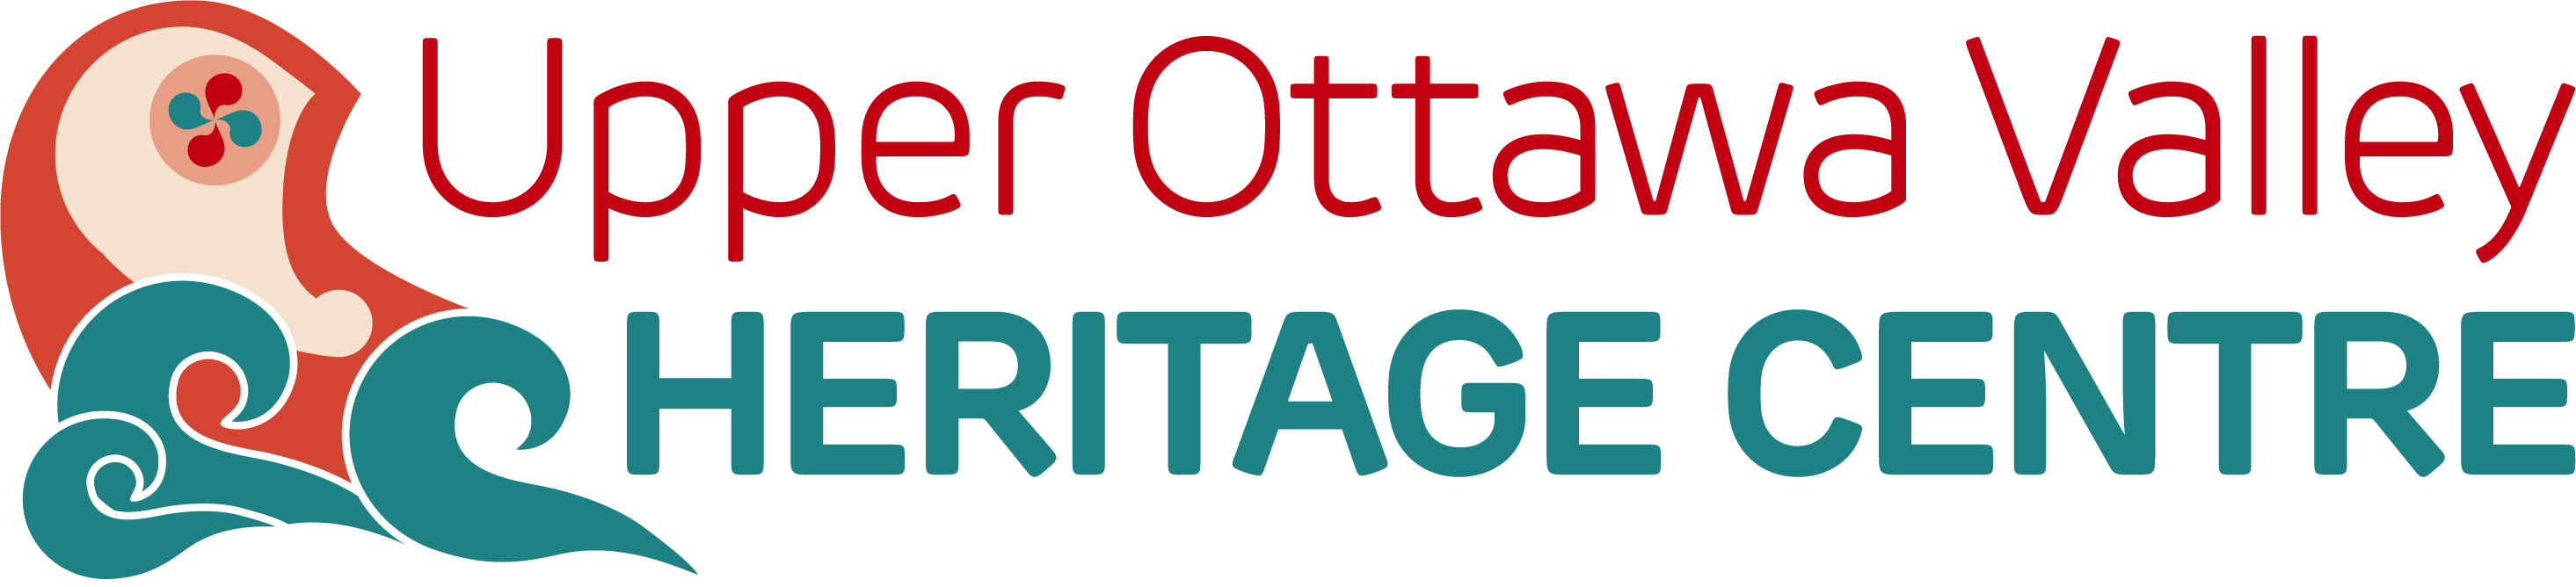 Upper Ottawa Valley Heritage Centre